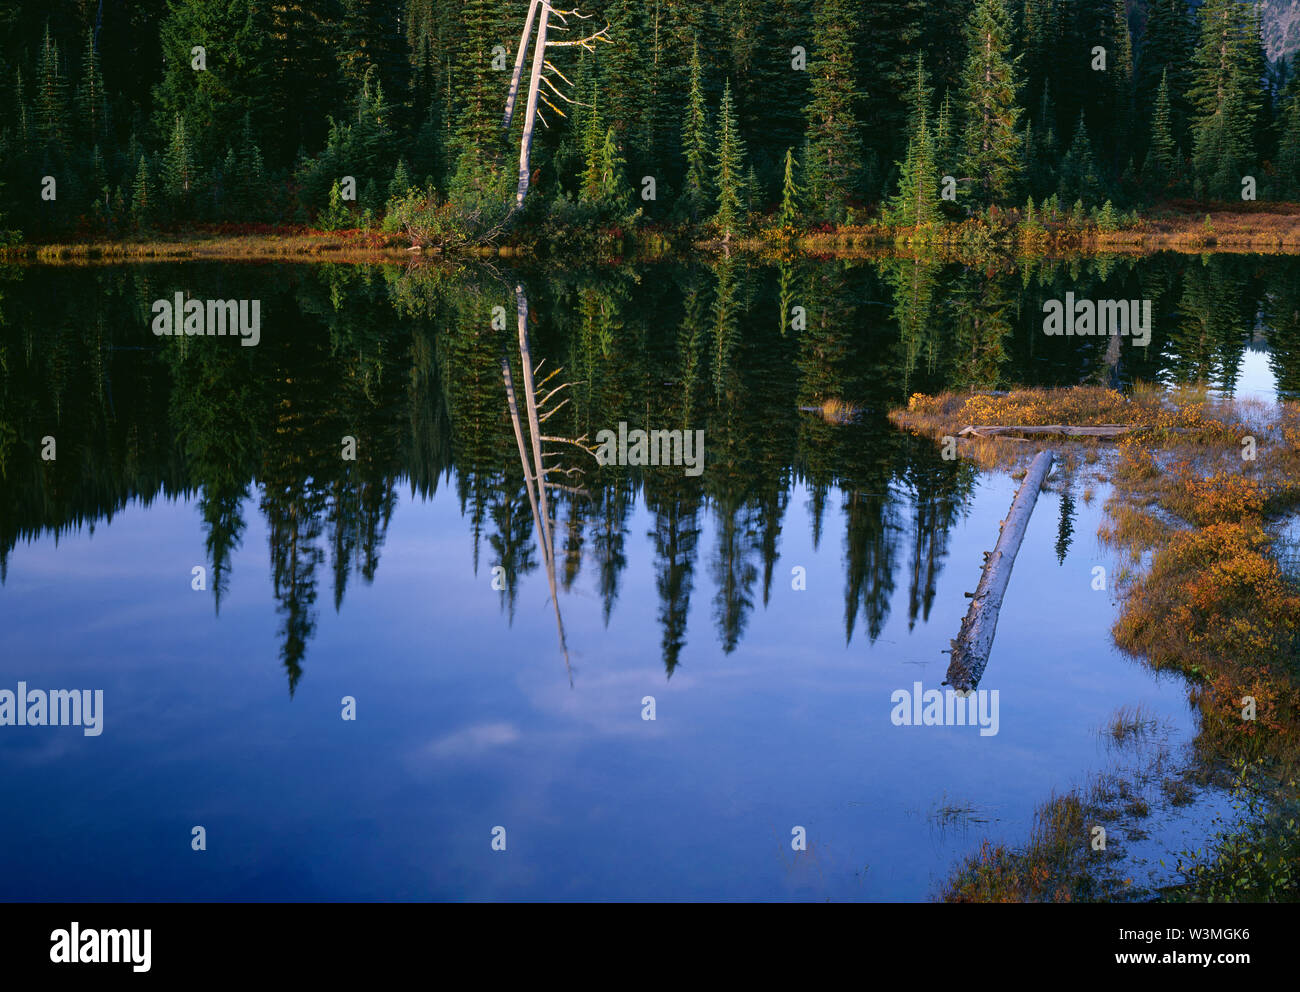 USA, Washington, Mt. Rainier National Park, Shoreline of Reflection Lake with evergreen forest and autumn colored foliage. Stock Photo